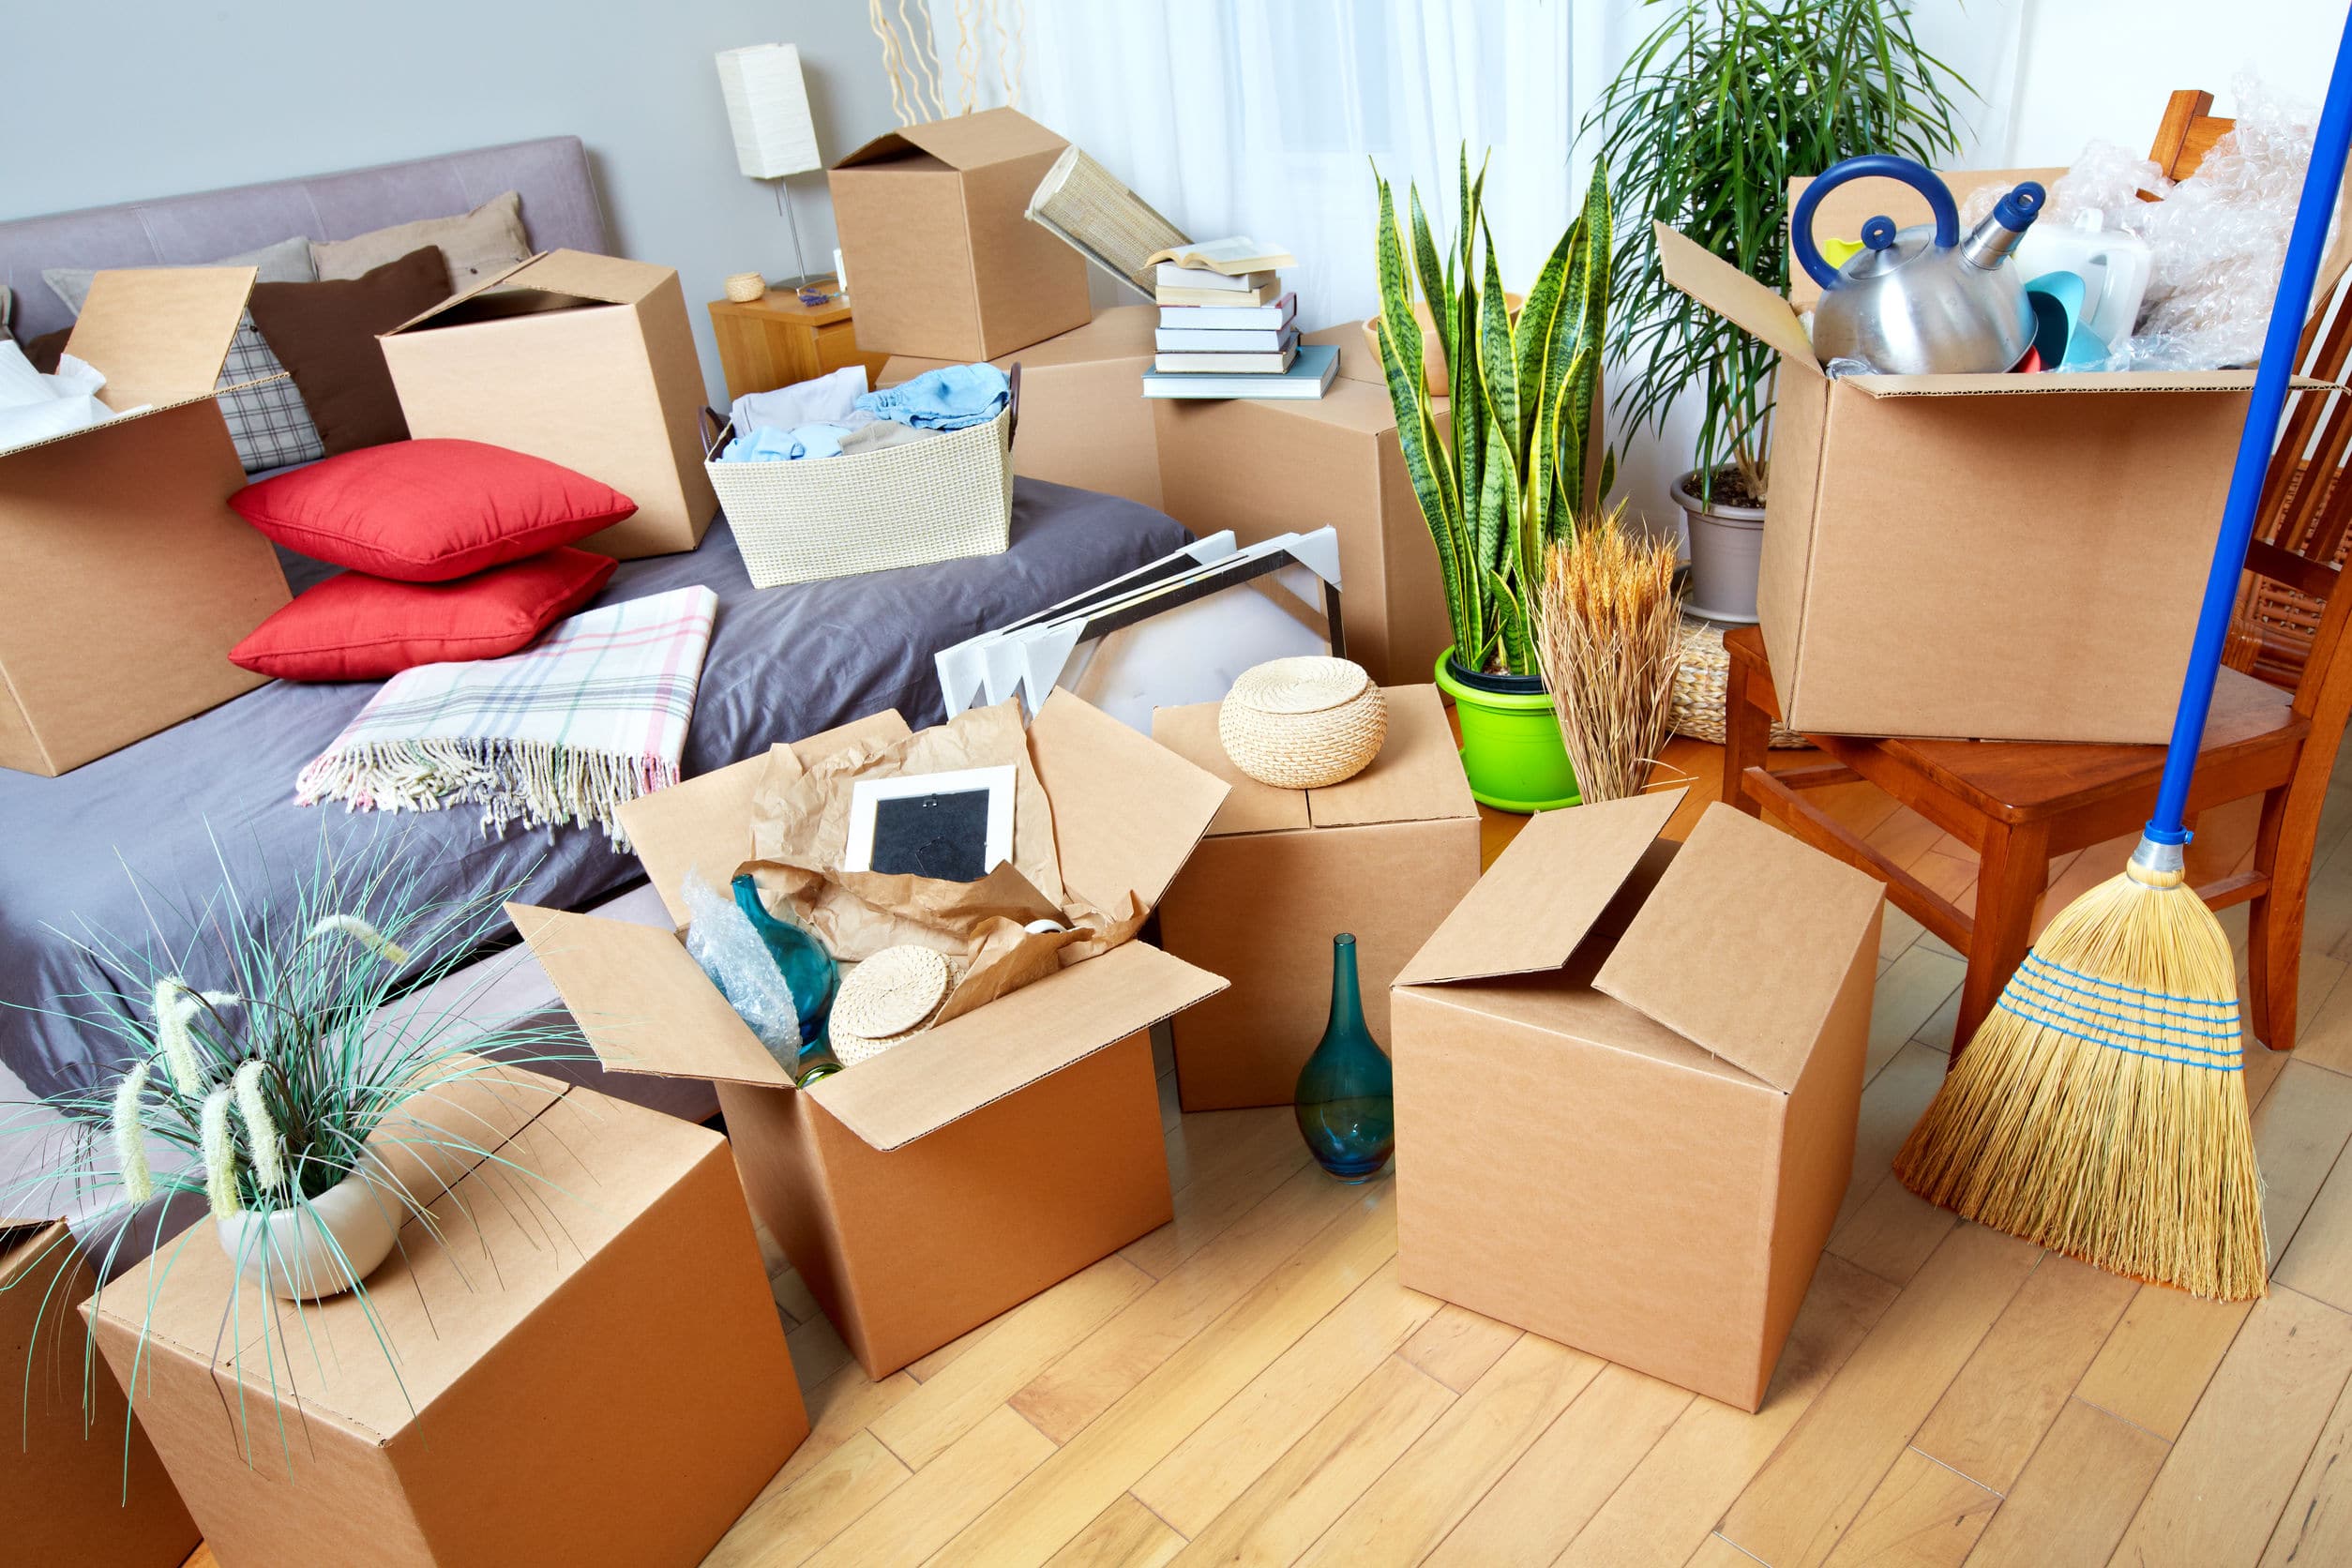 15 вещей в доме. Переезд. Комната с коробками. Вещи в квартире. Коробки в квартире.